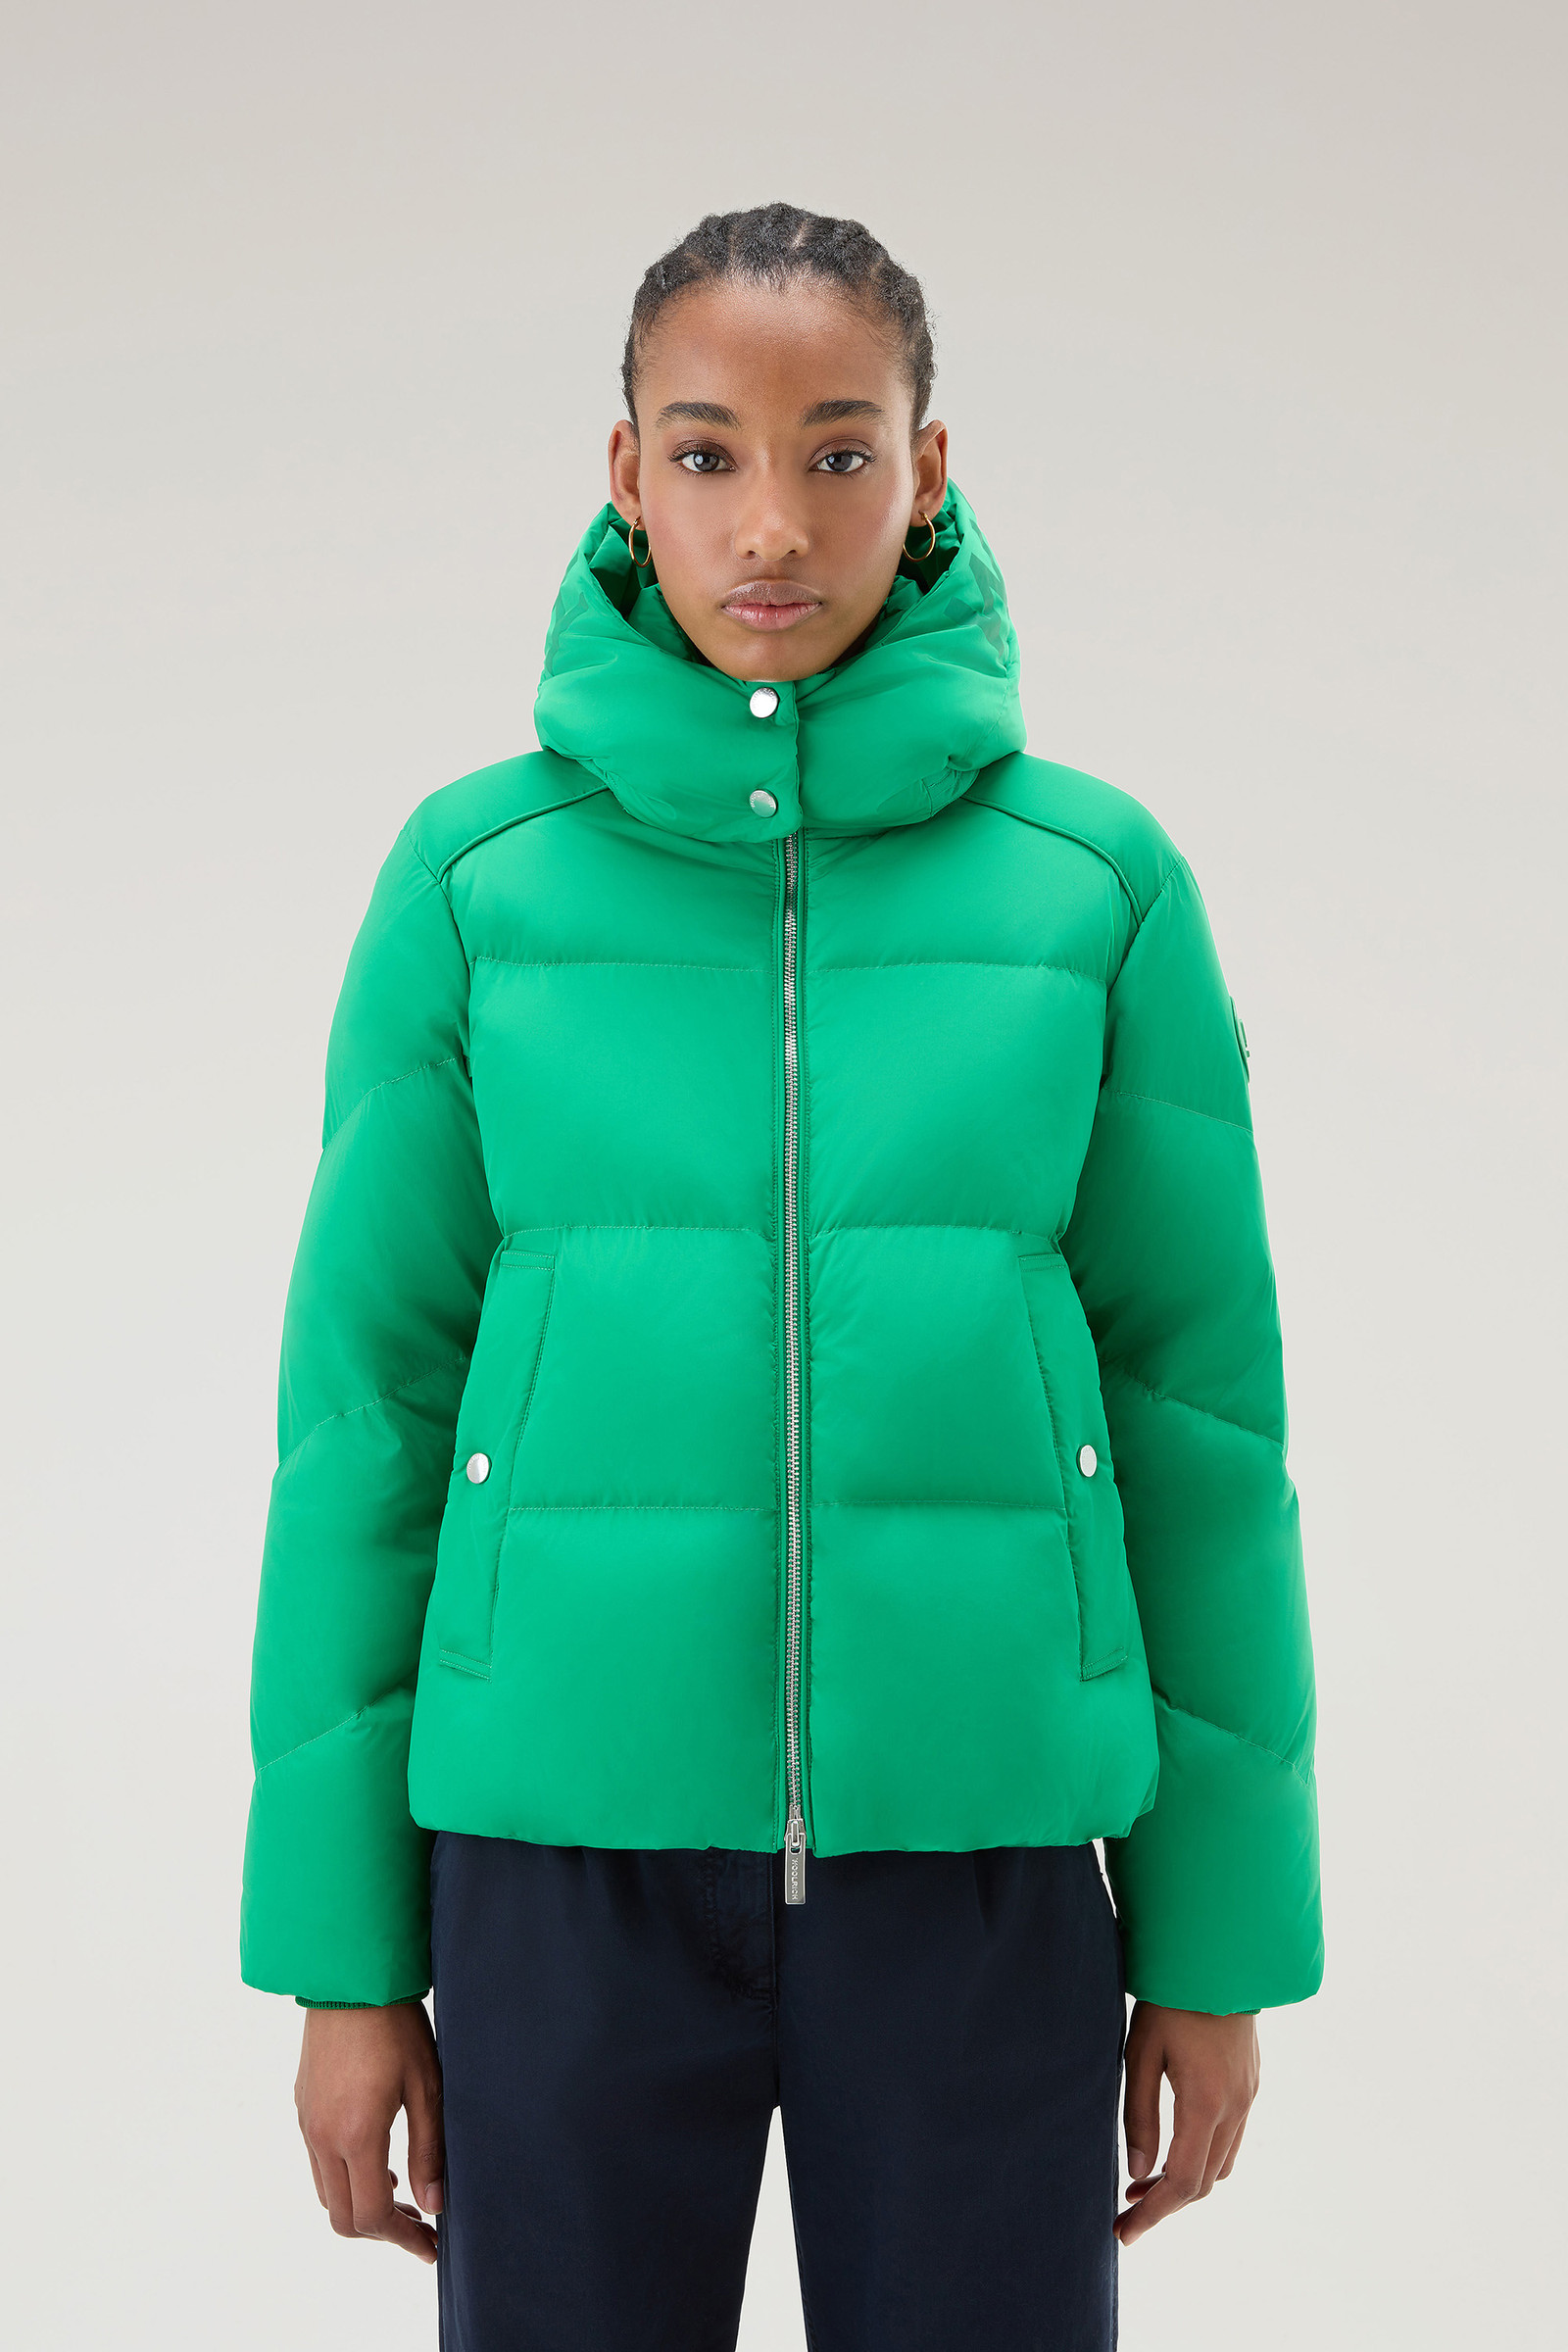 Woolrich Women's Alsea Short Down Jacket with Detachable Hood - Frank's  Sports Shop